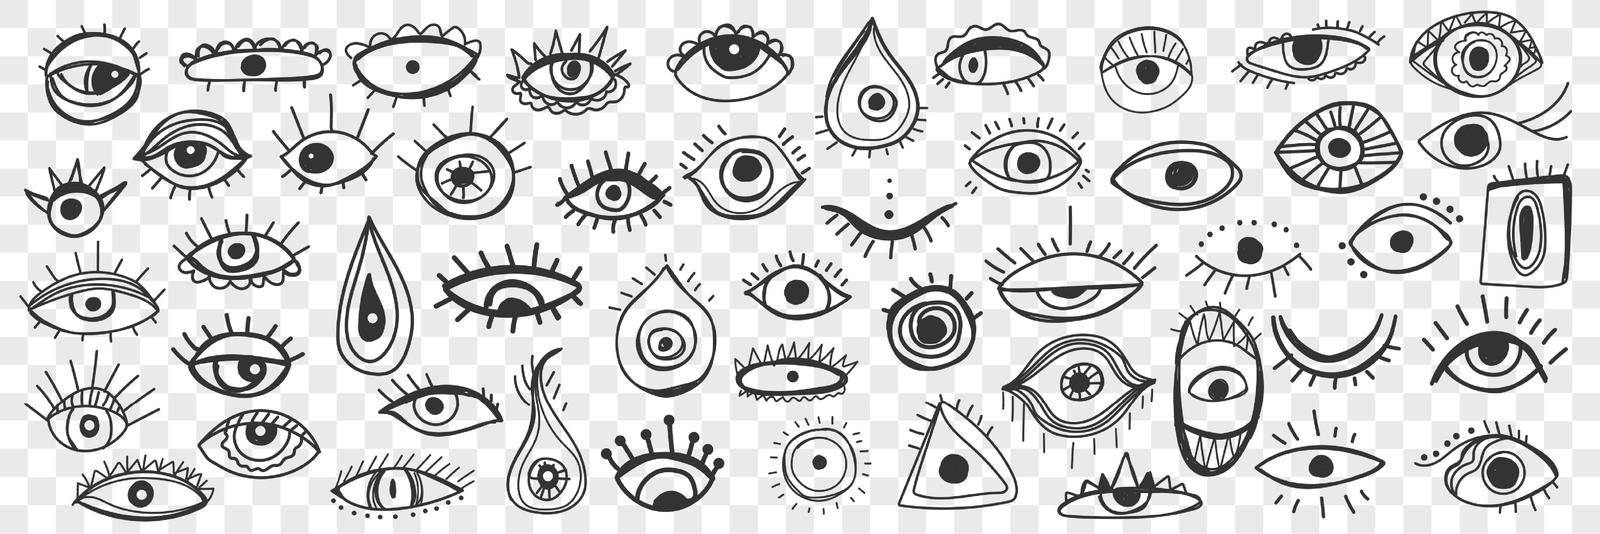 Spiritual occult eye doodle set by Vasilyeva